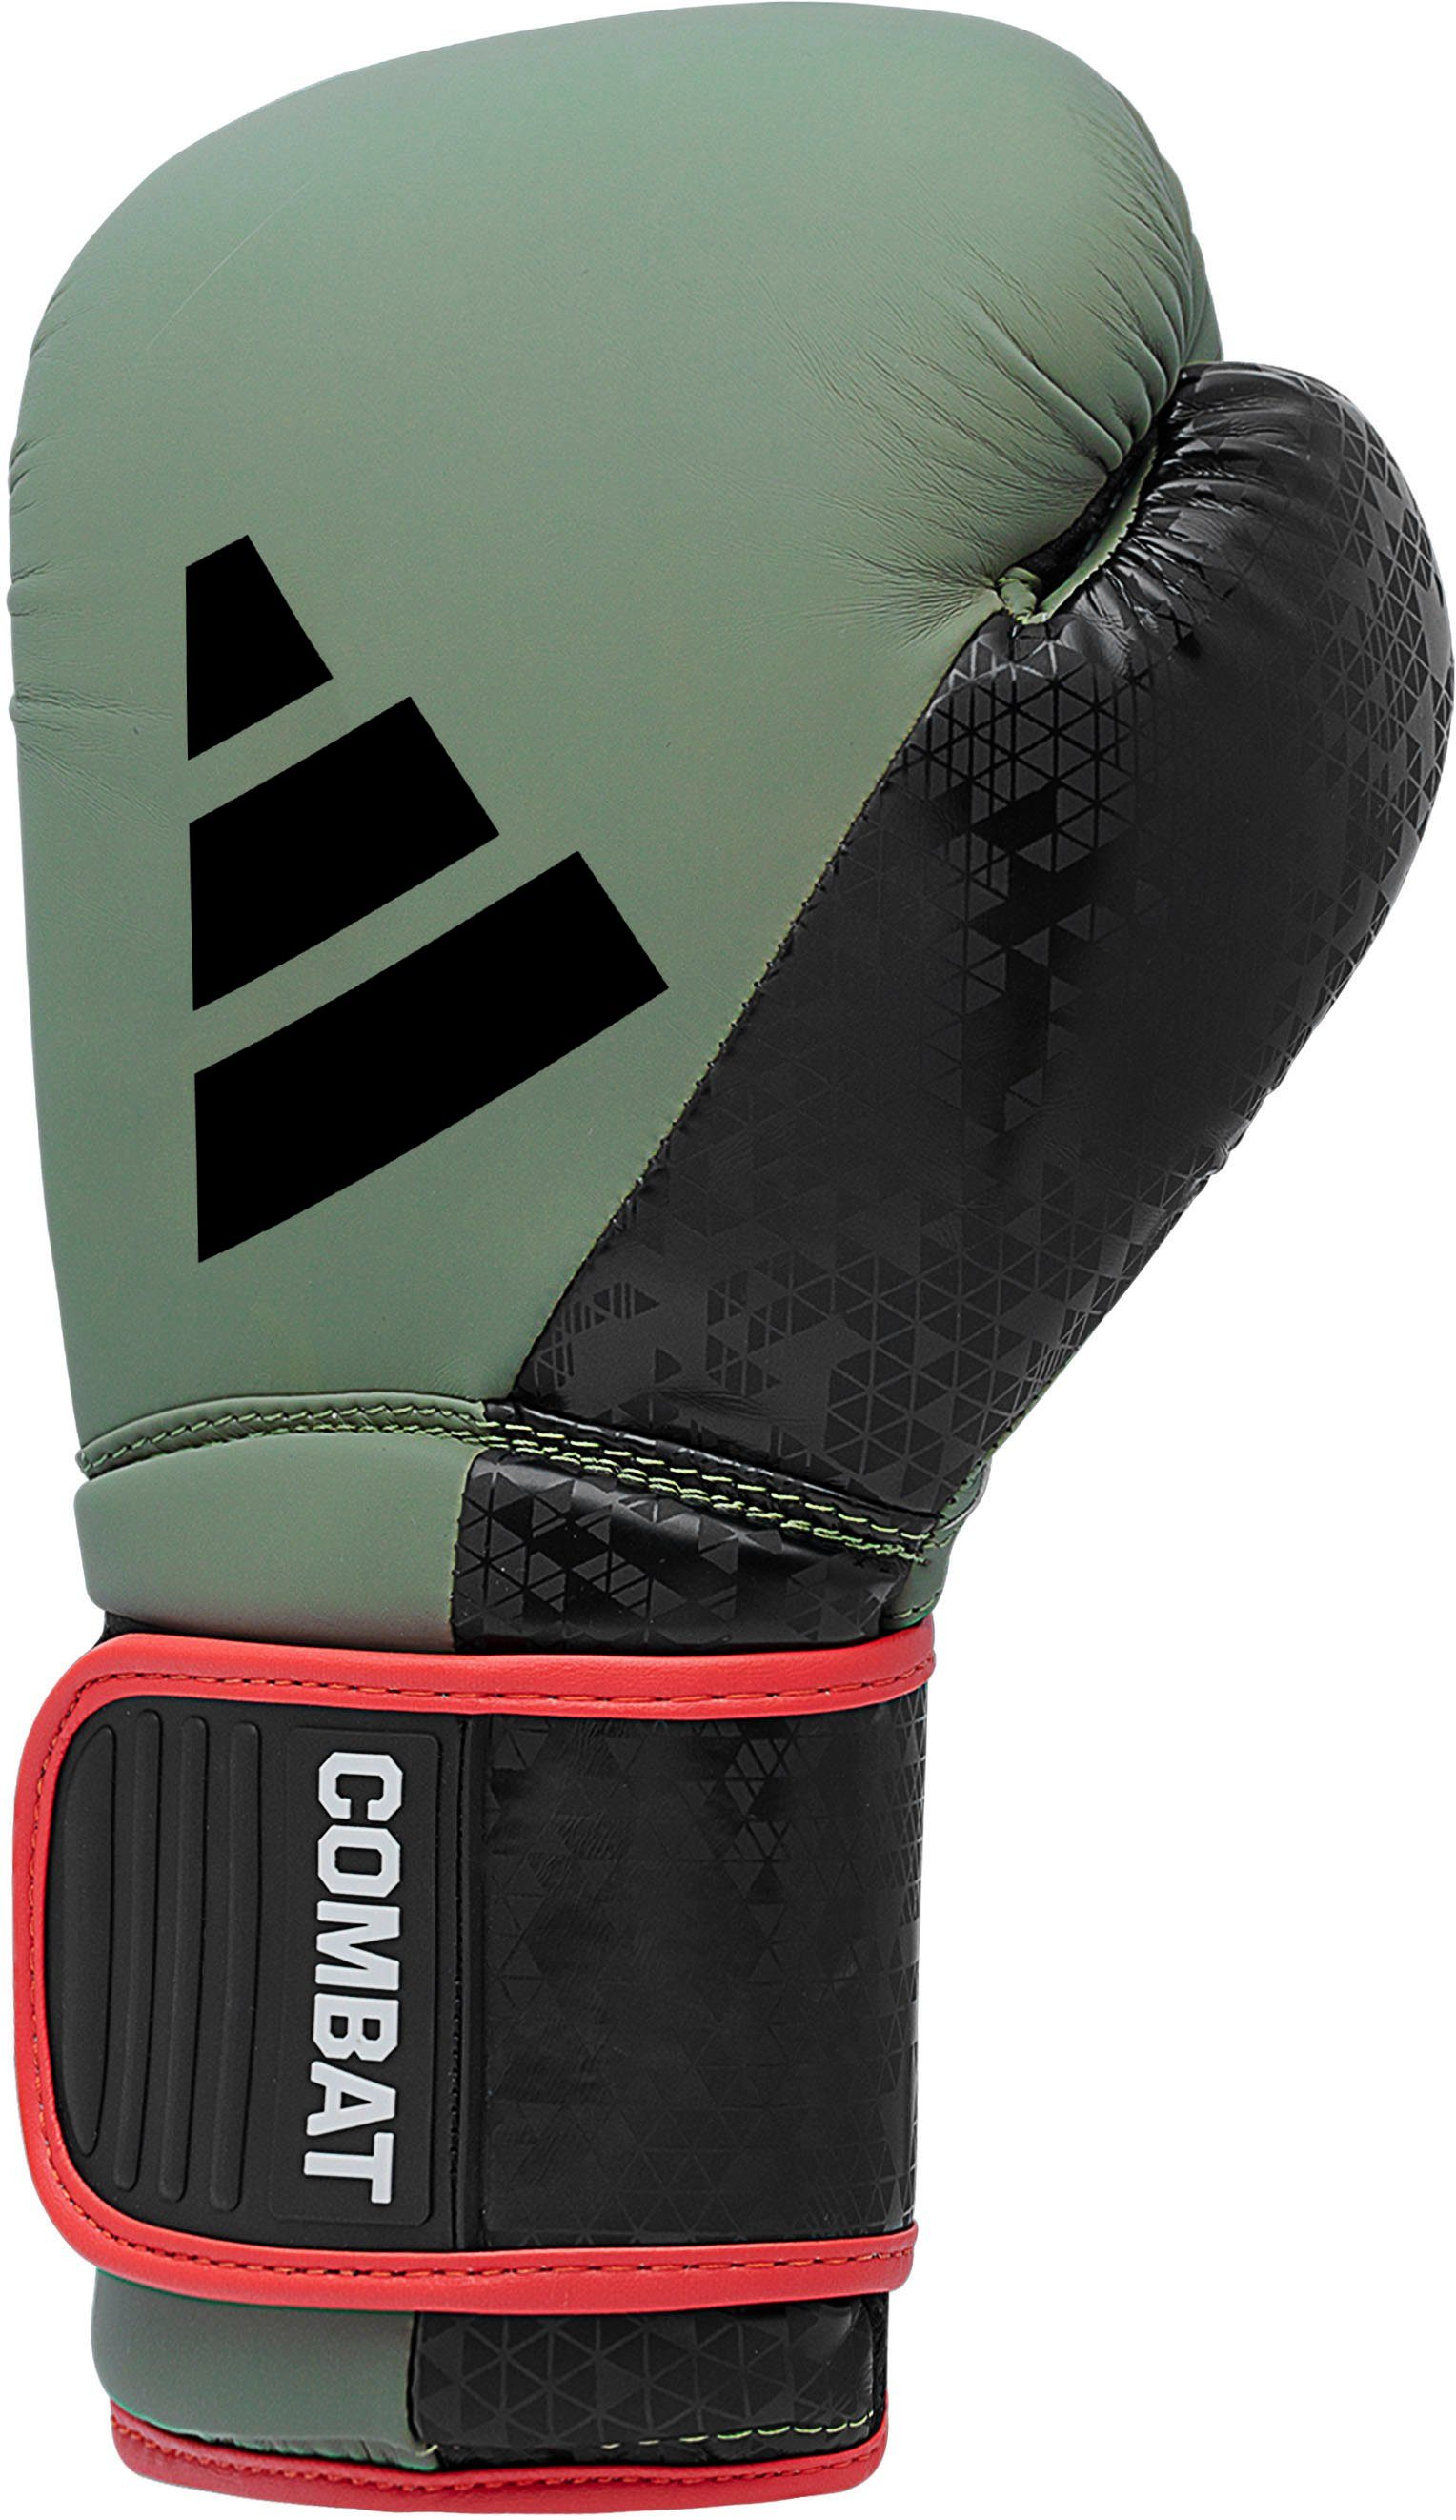 Performance adidas Boxhandschuhe 50 olivgrün/schwarz Combat